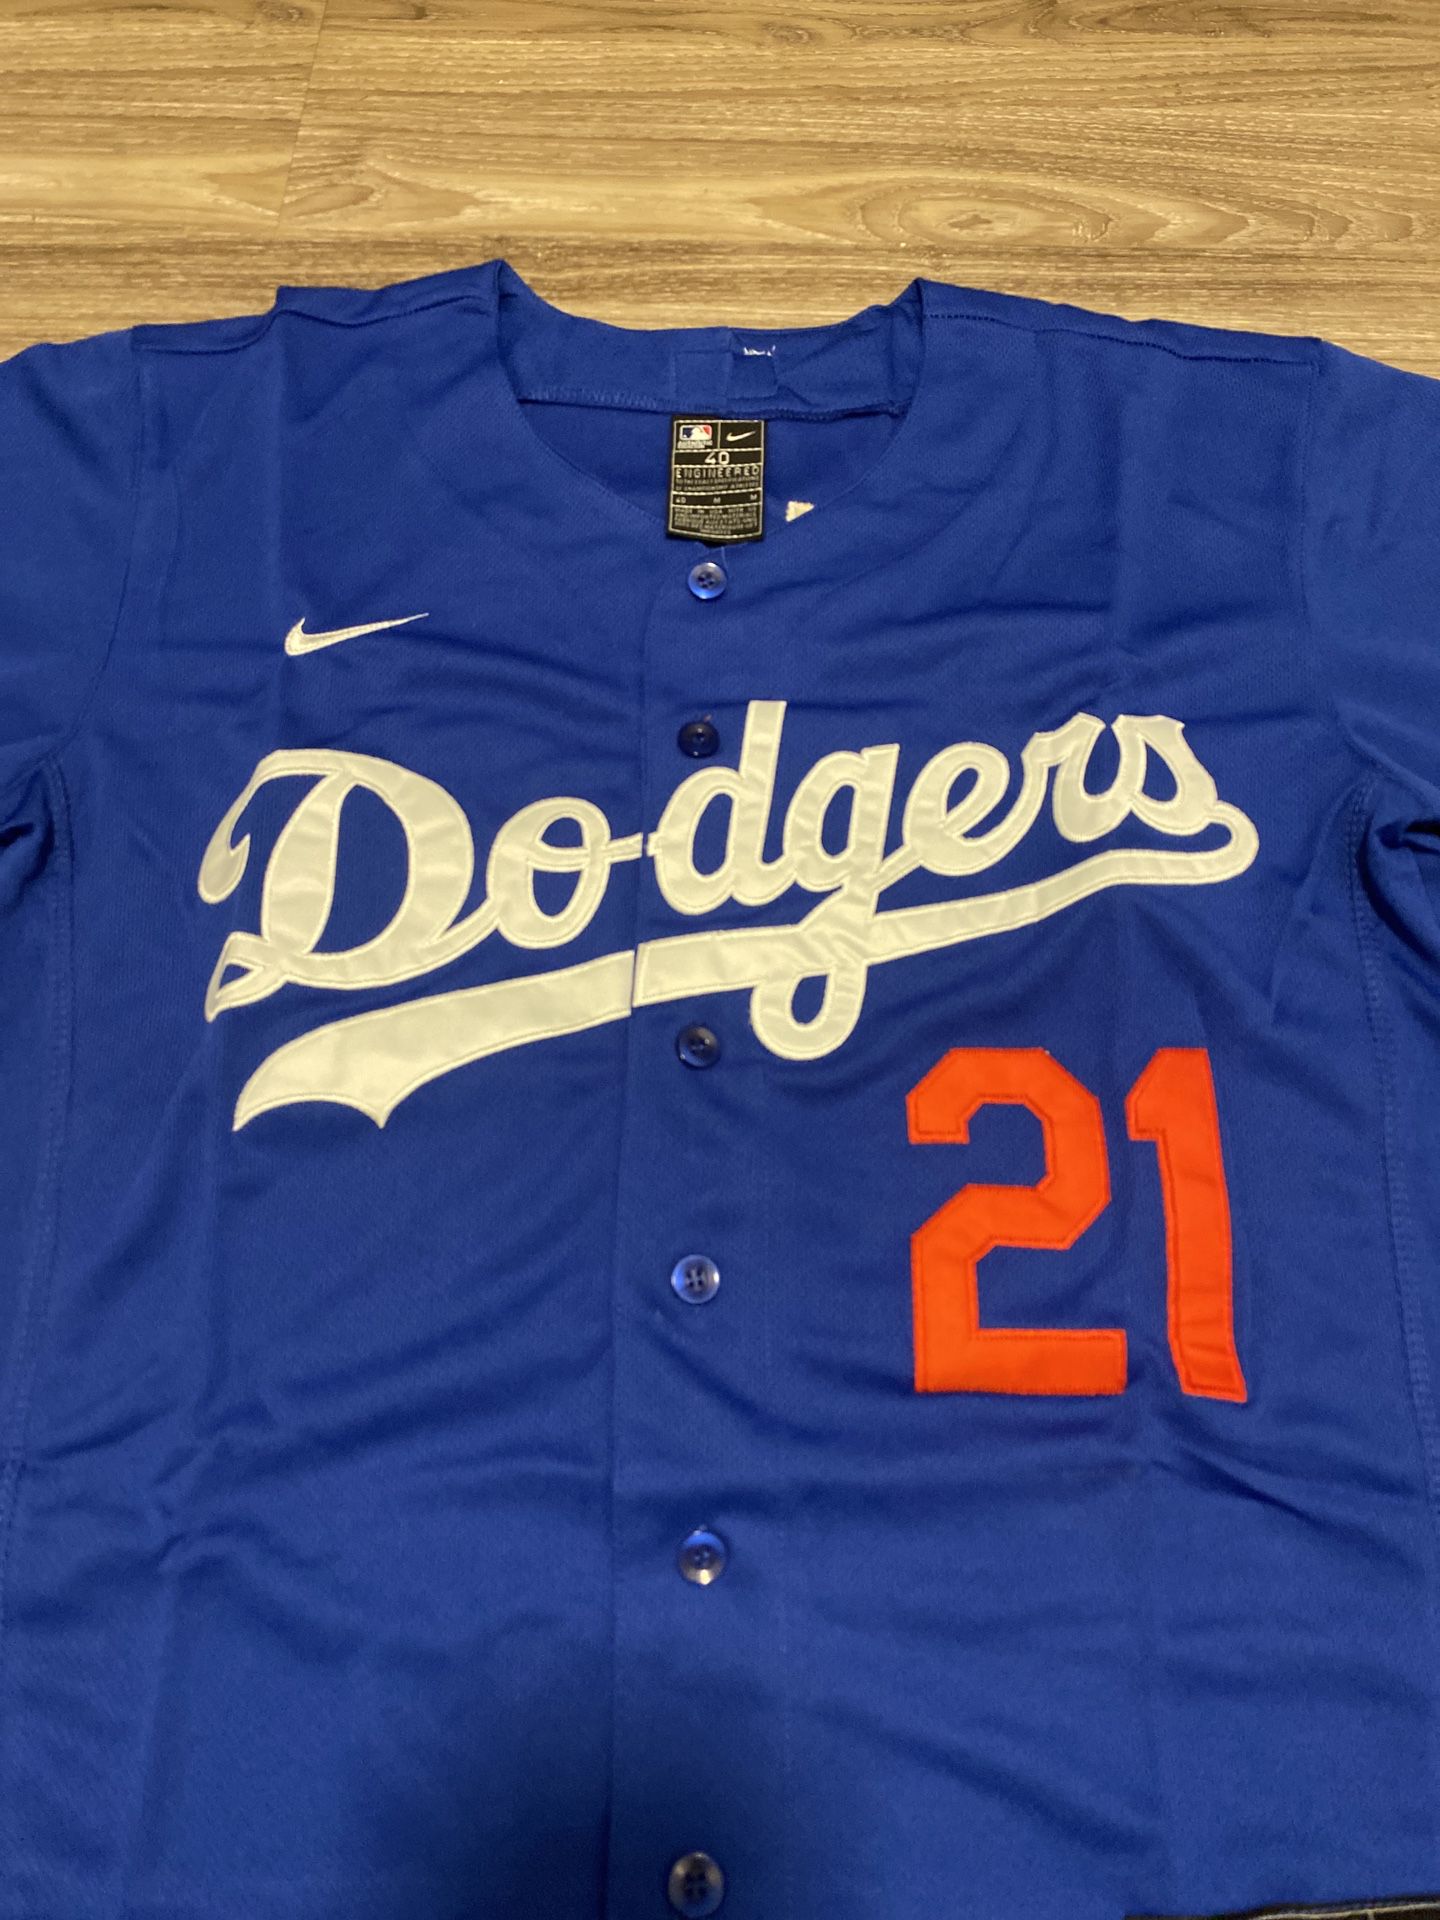 Dodgers Jersey 3XL (WALKER BUEHLER) for Sale in Glendora, CA - OfferUp